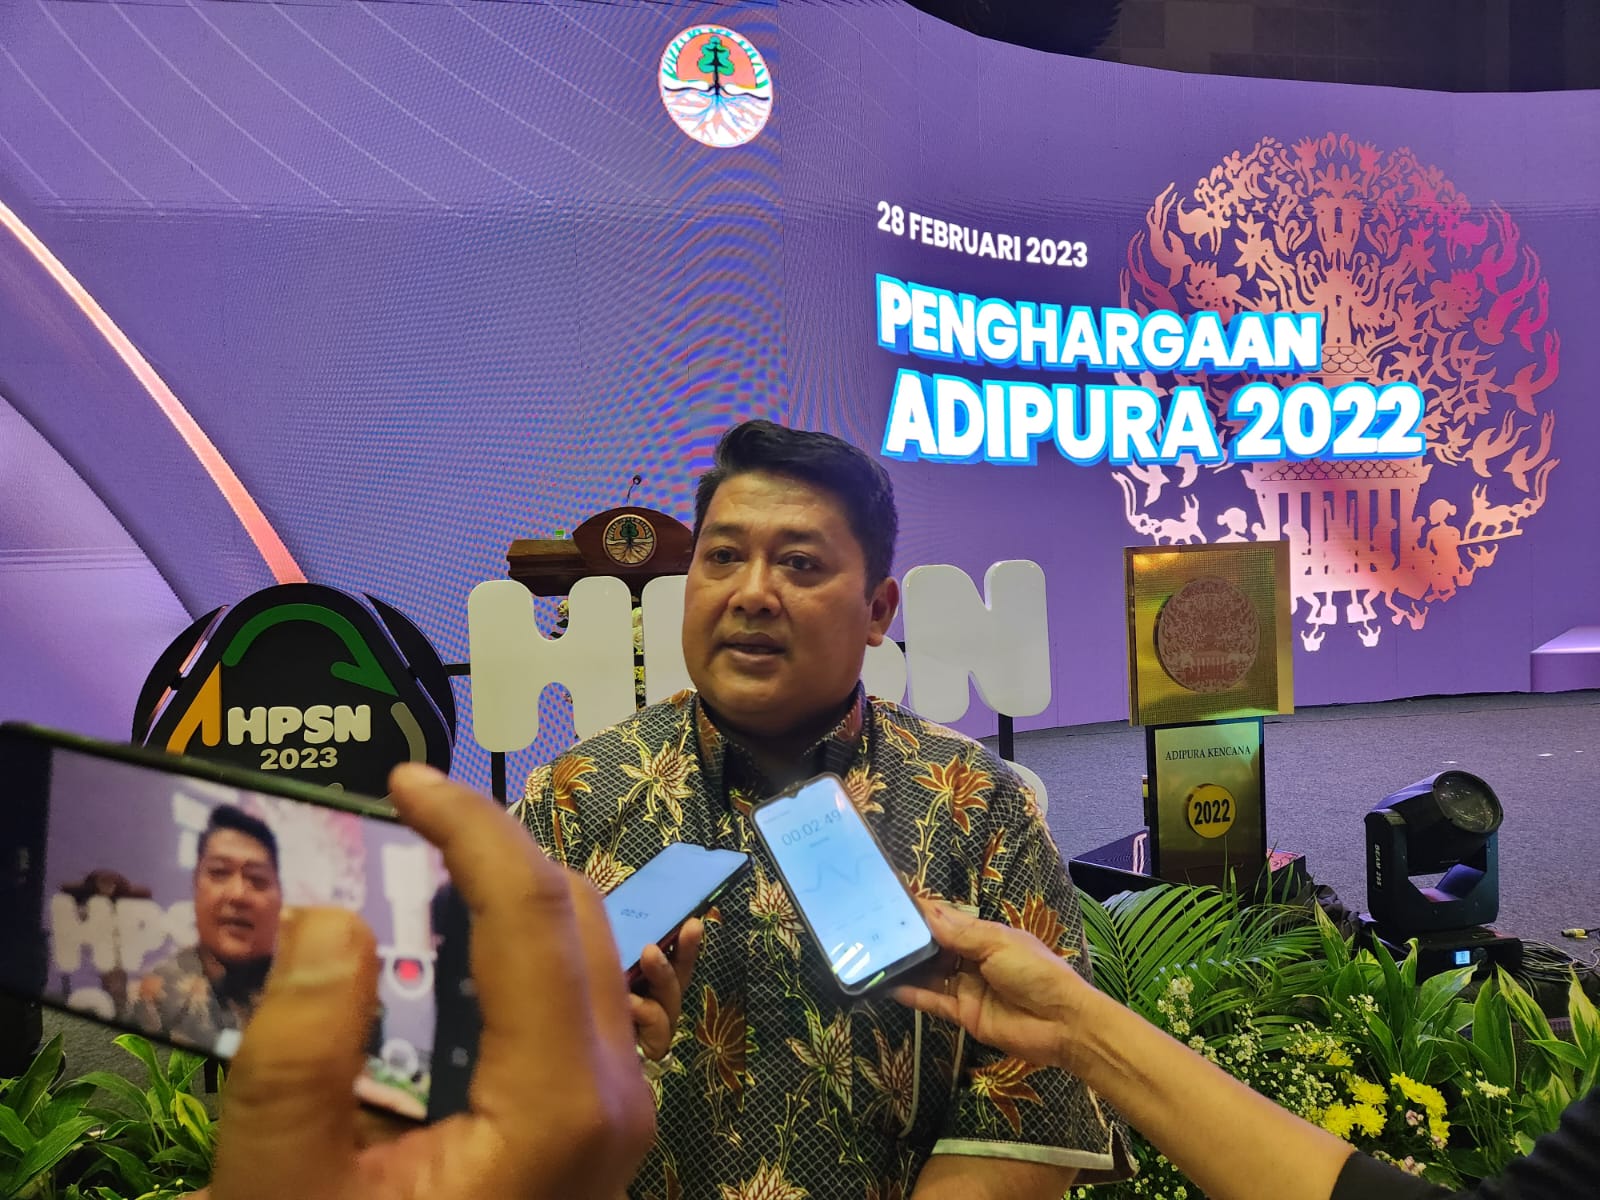 Foto: Hendra Afriandi, S.H.,M.Si selaku Kepala Dinas Lingkungan Hidup dan Kebersihan (DLHK) kota Pekanbaru, Ist